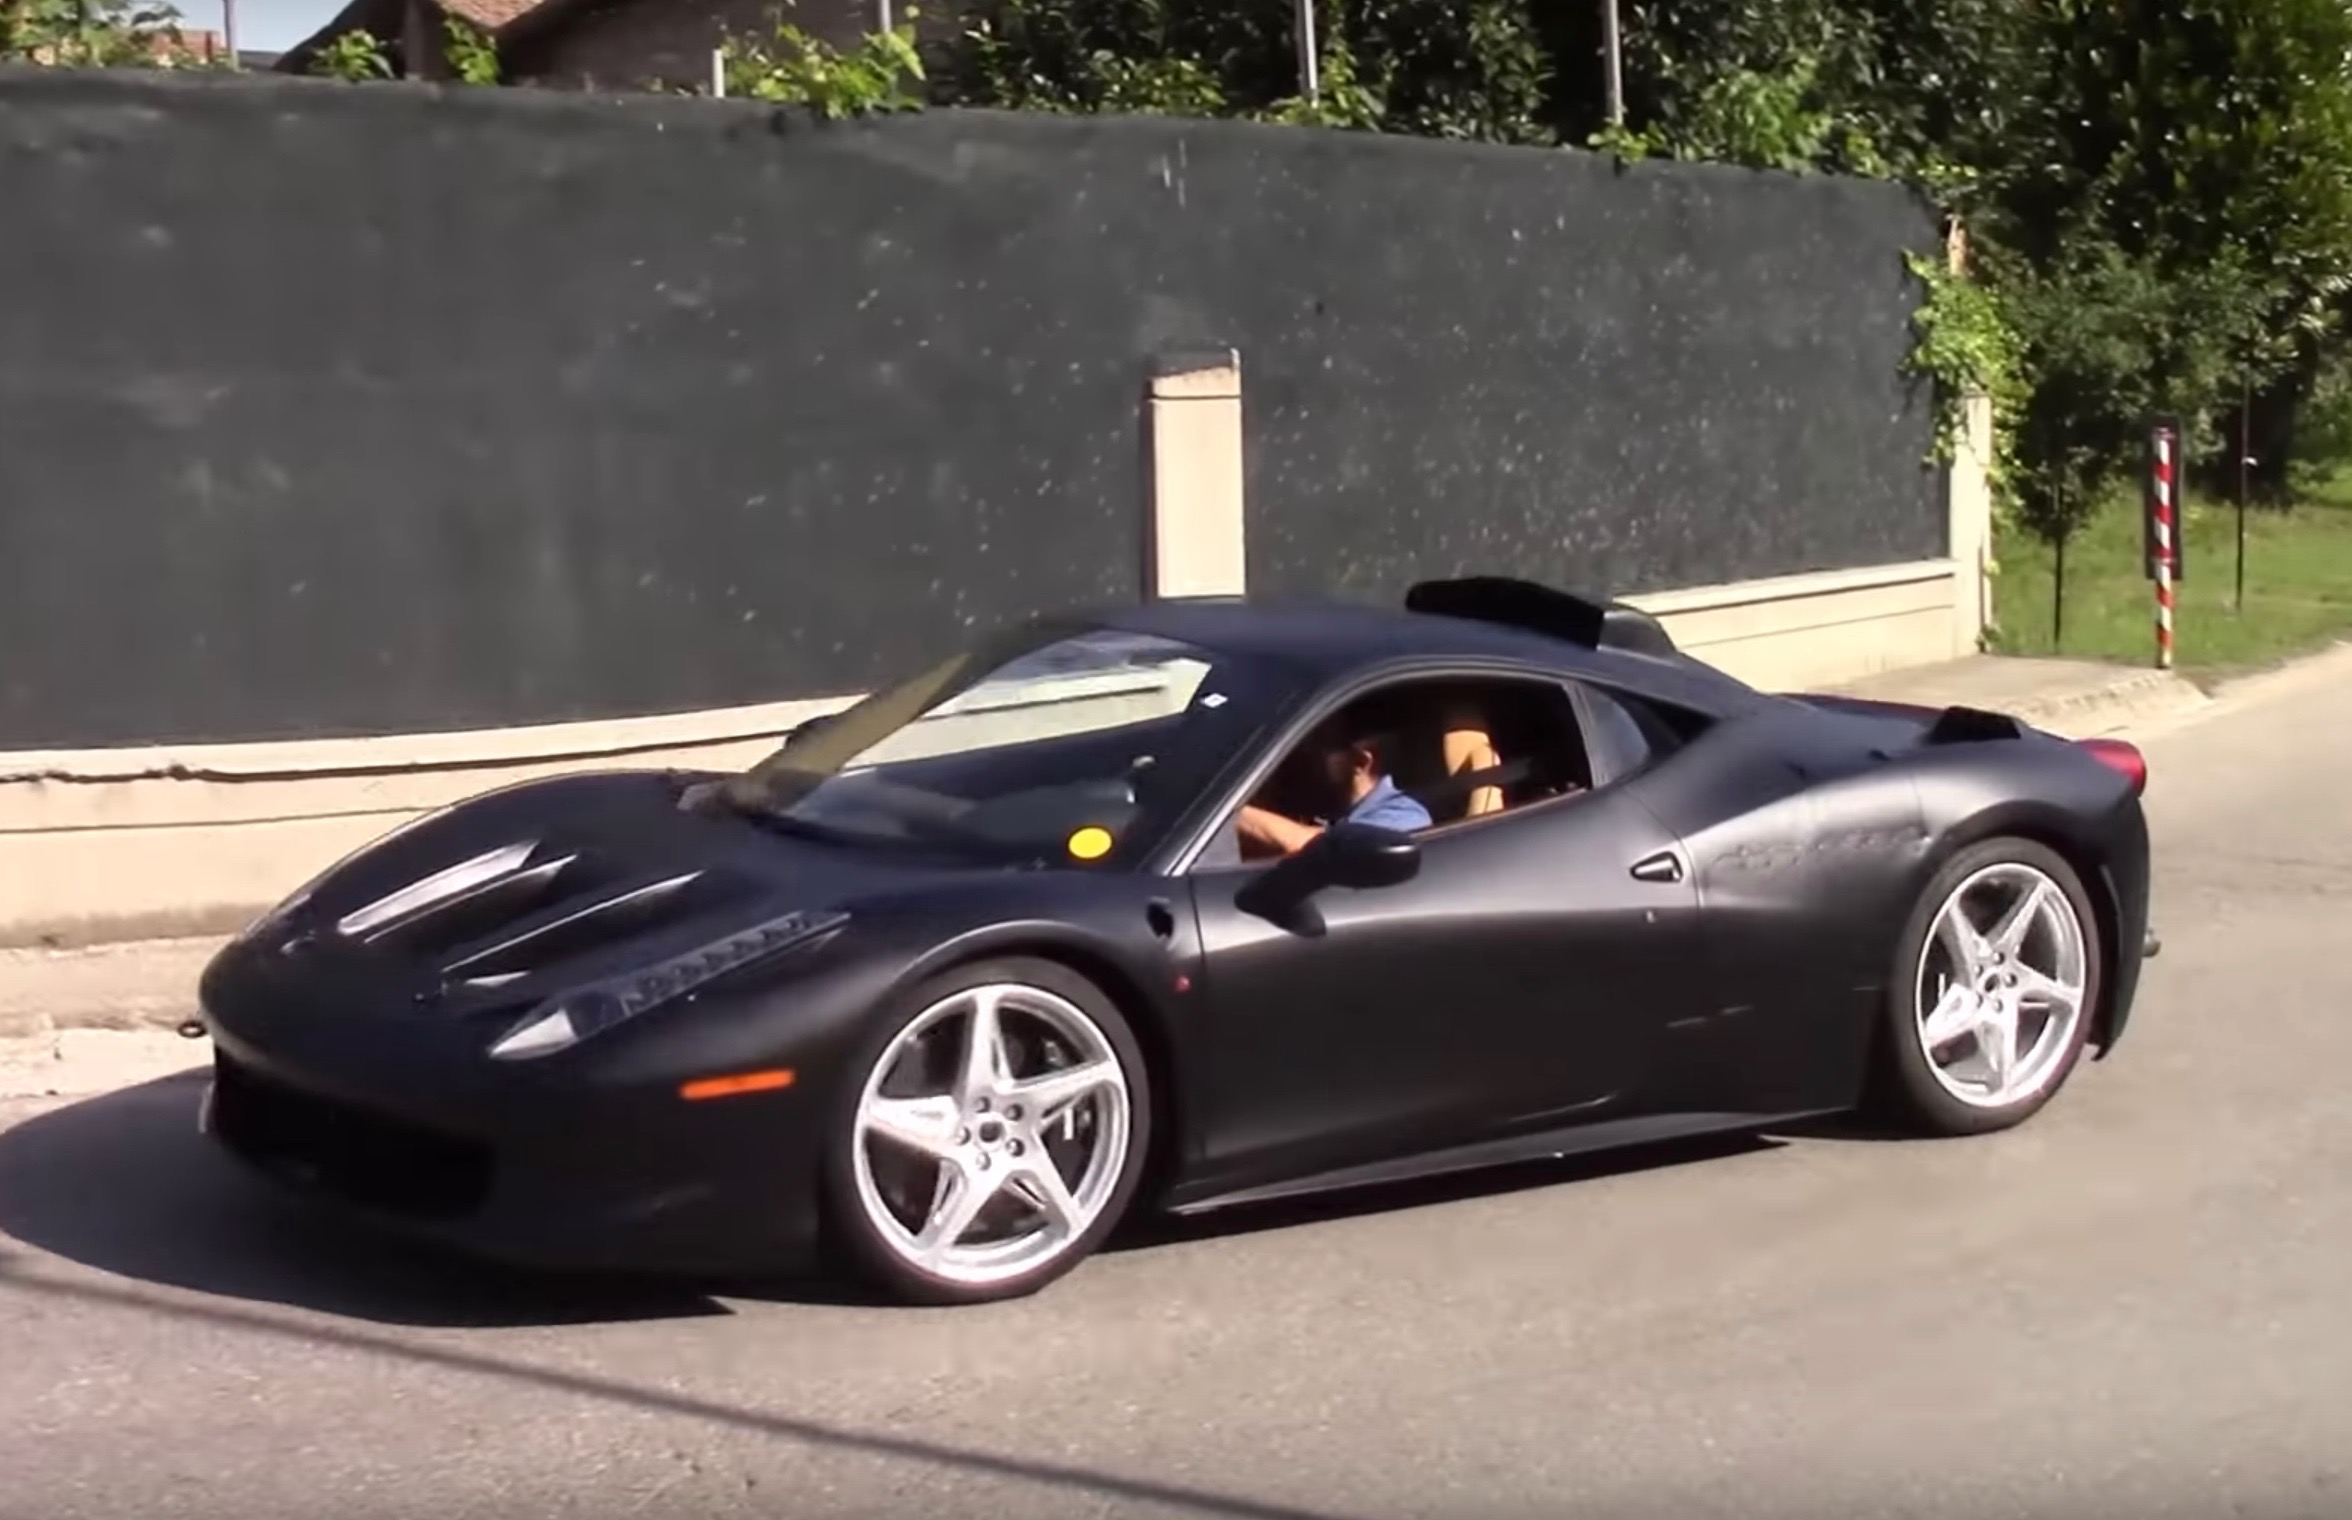 Unusual Ferrari 488 prototype spotted, hybrid power? (video)